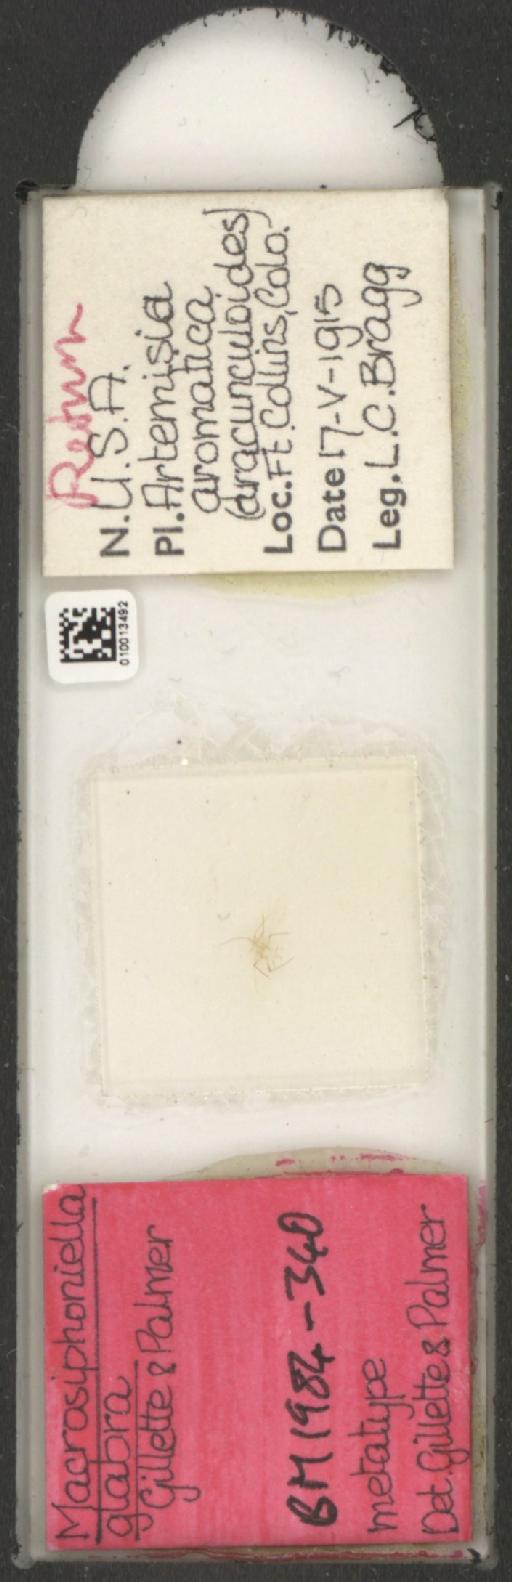 Macrosiphoniella glabra Gillette & Palmer, 1928 - 010013492_112660_1094724